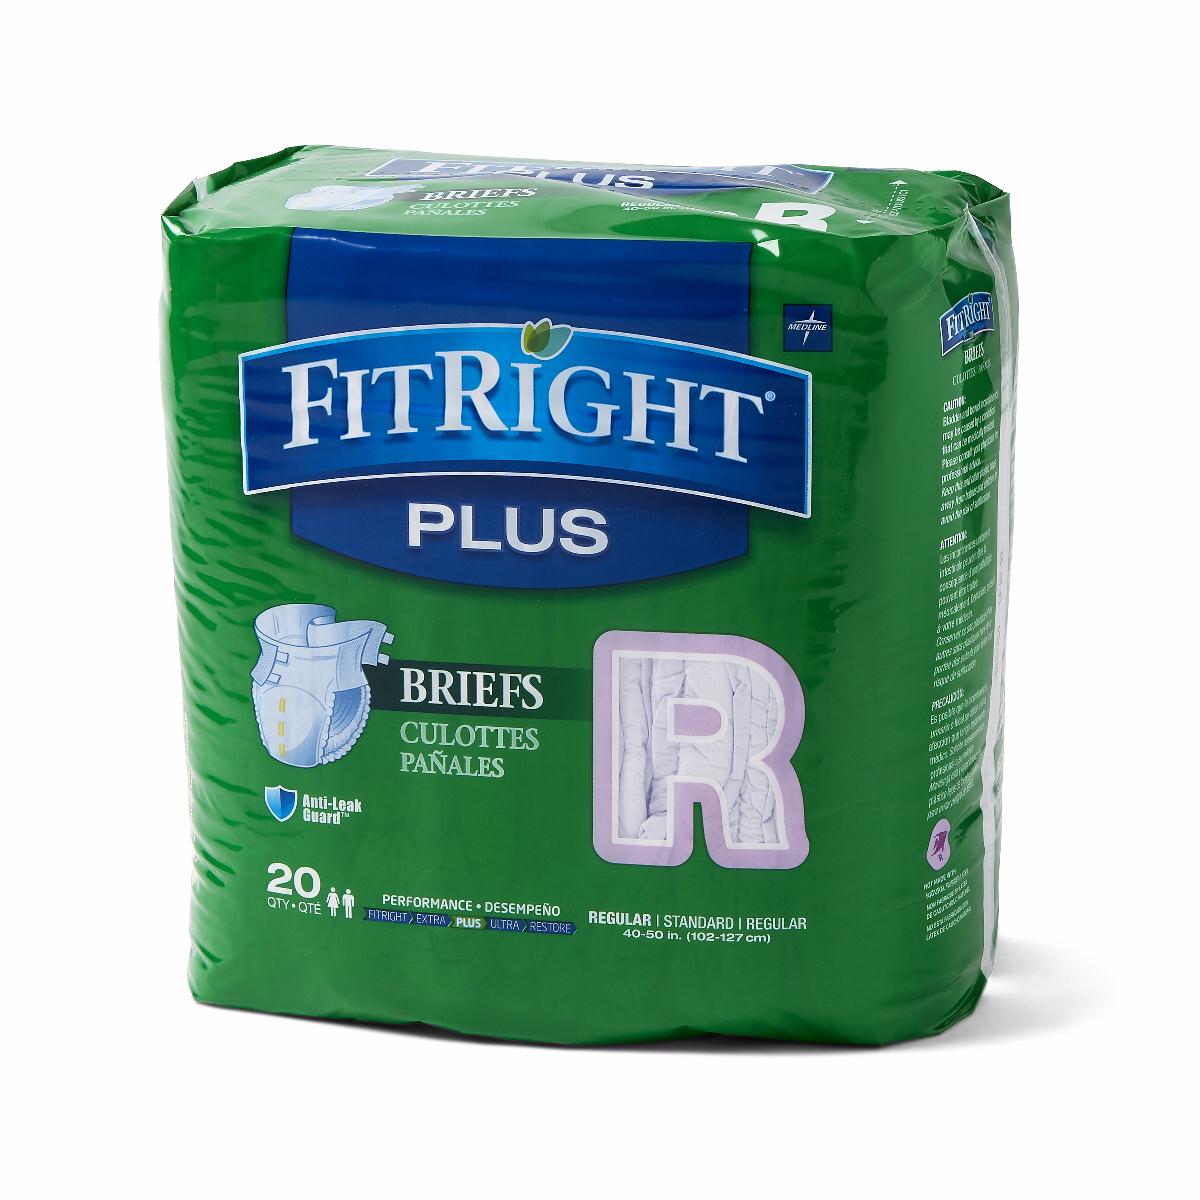 FitRight Plus Briefs, Regular